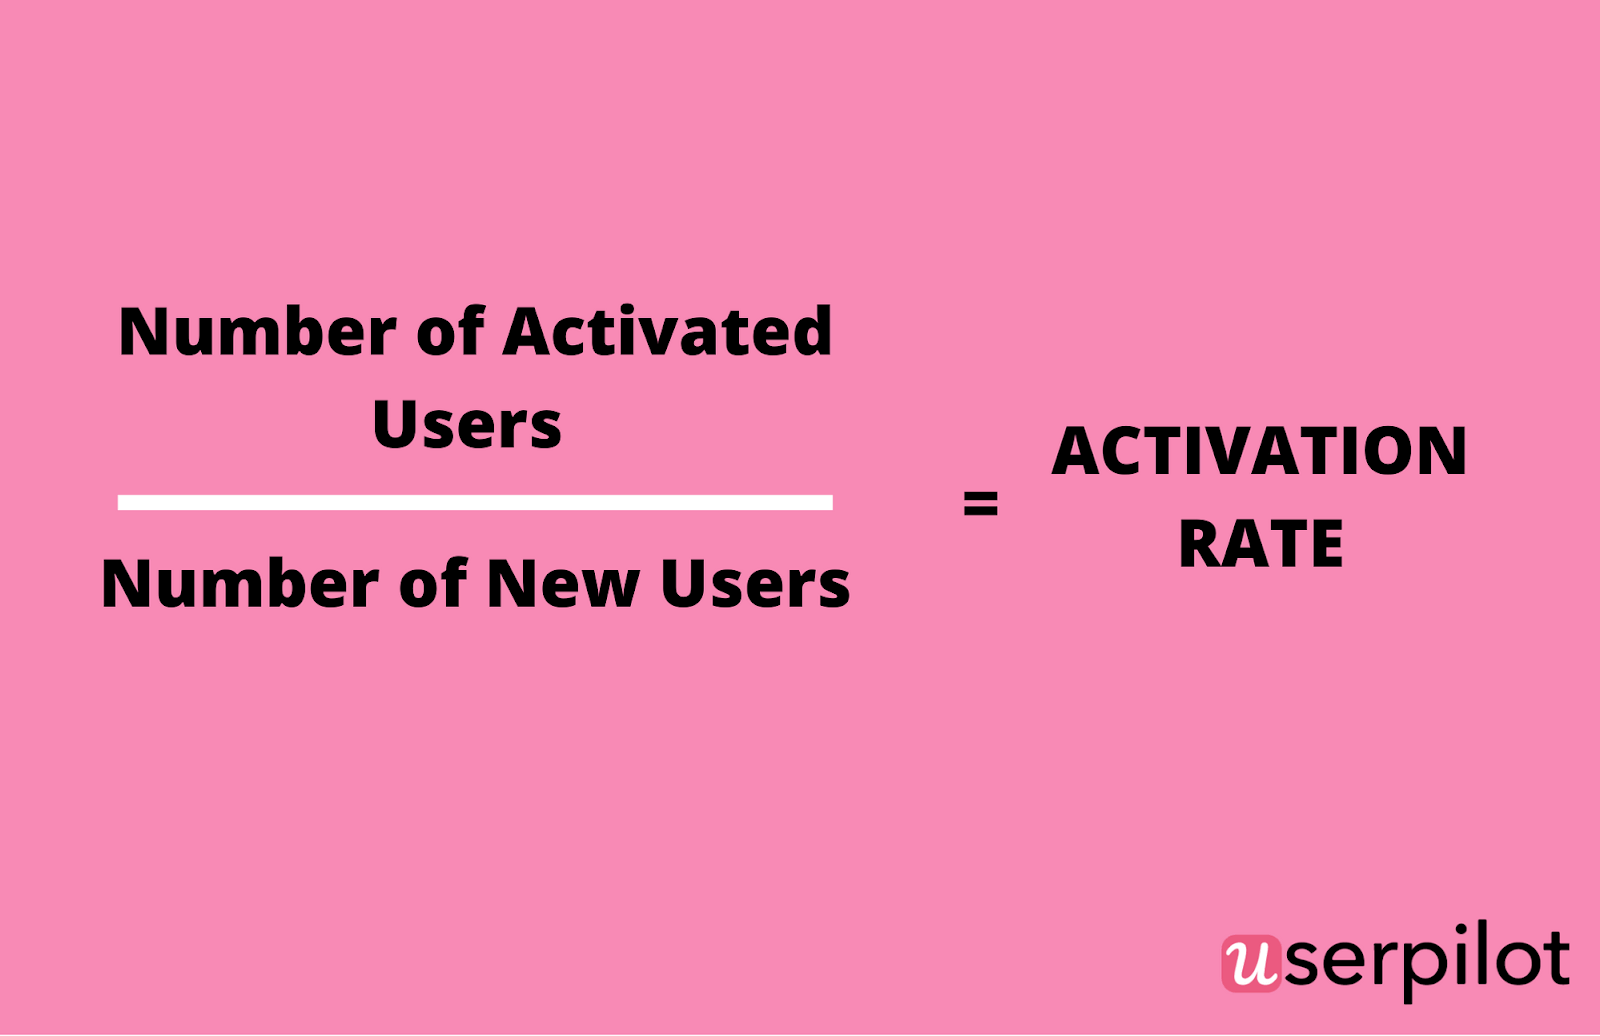 UserPilot activation rate formula